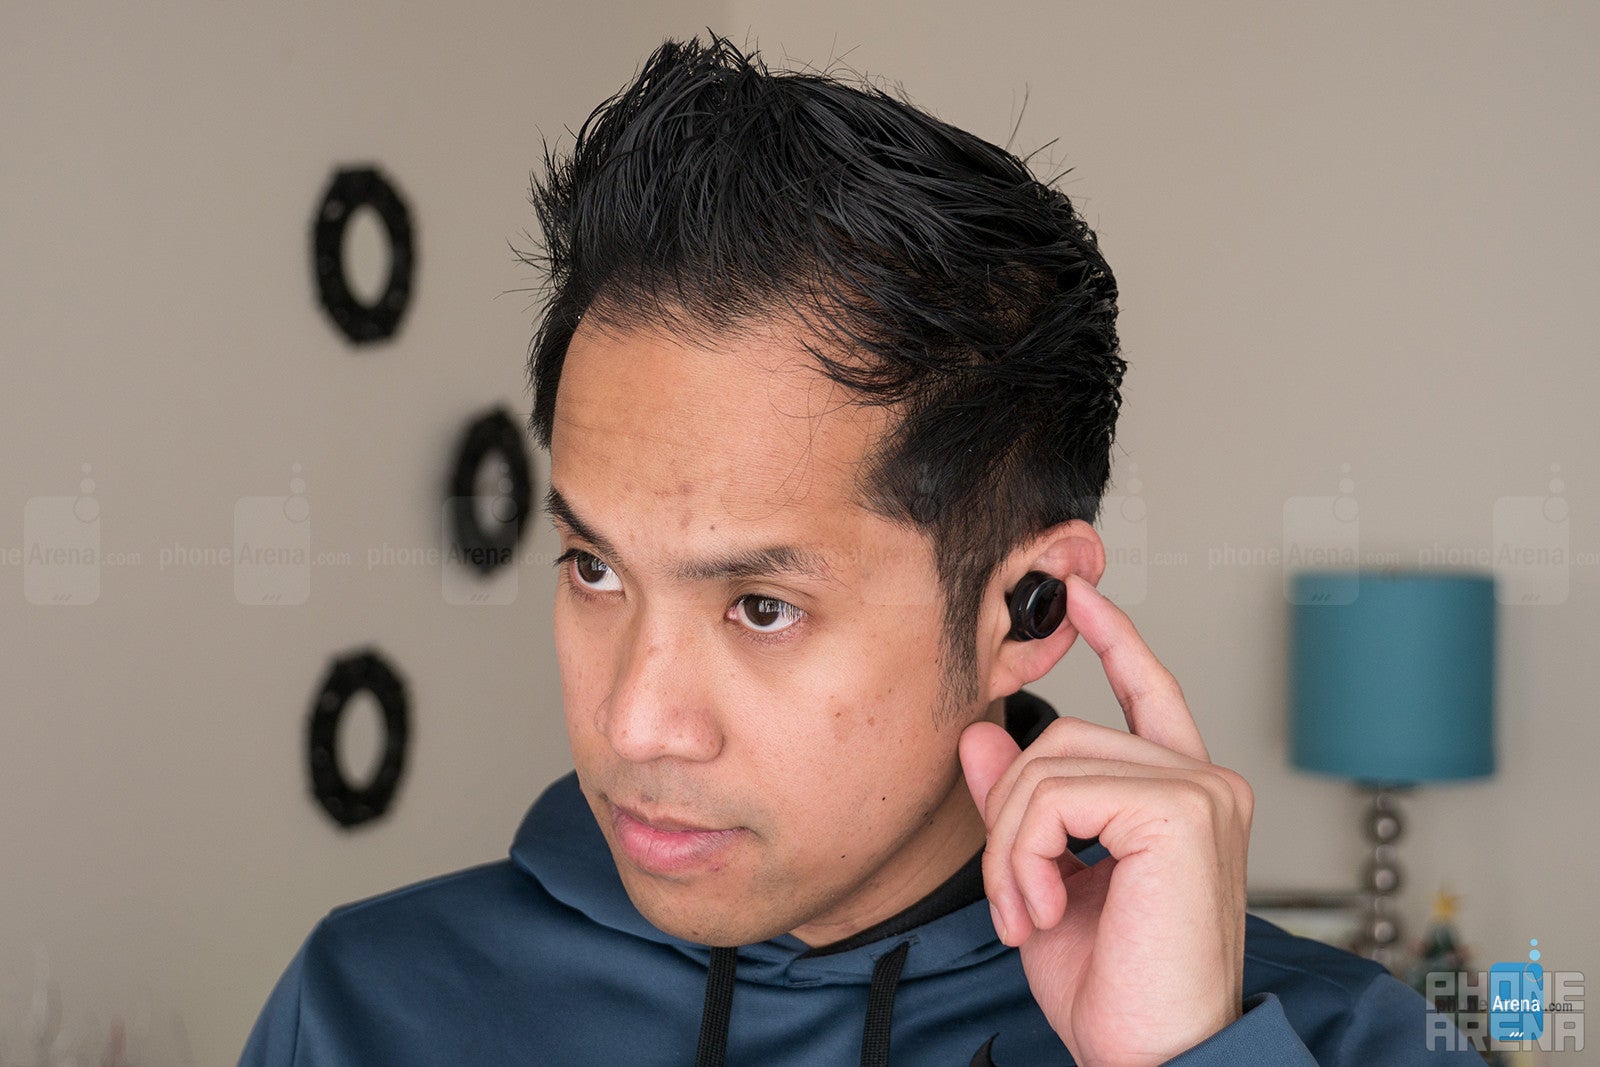 Bragi Dash Pro wireless earphones Review